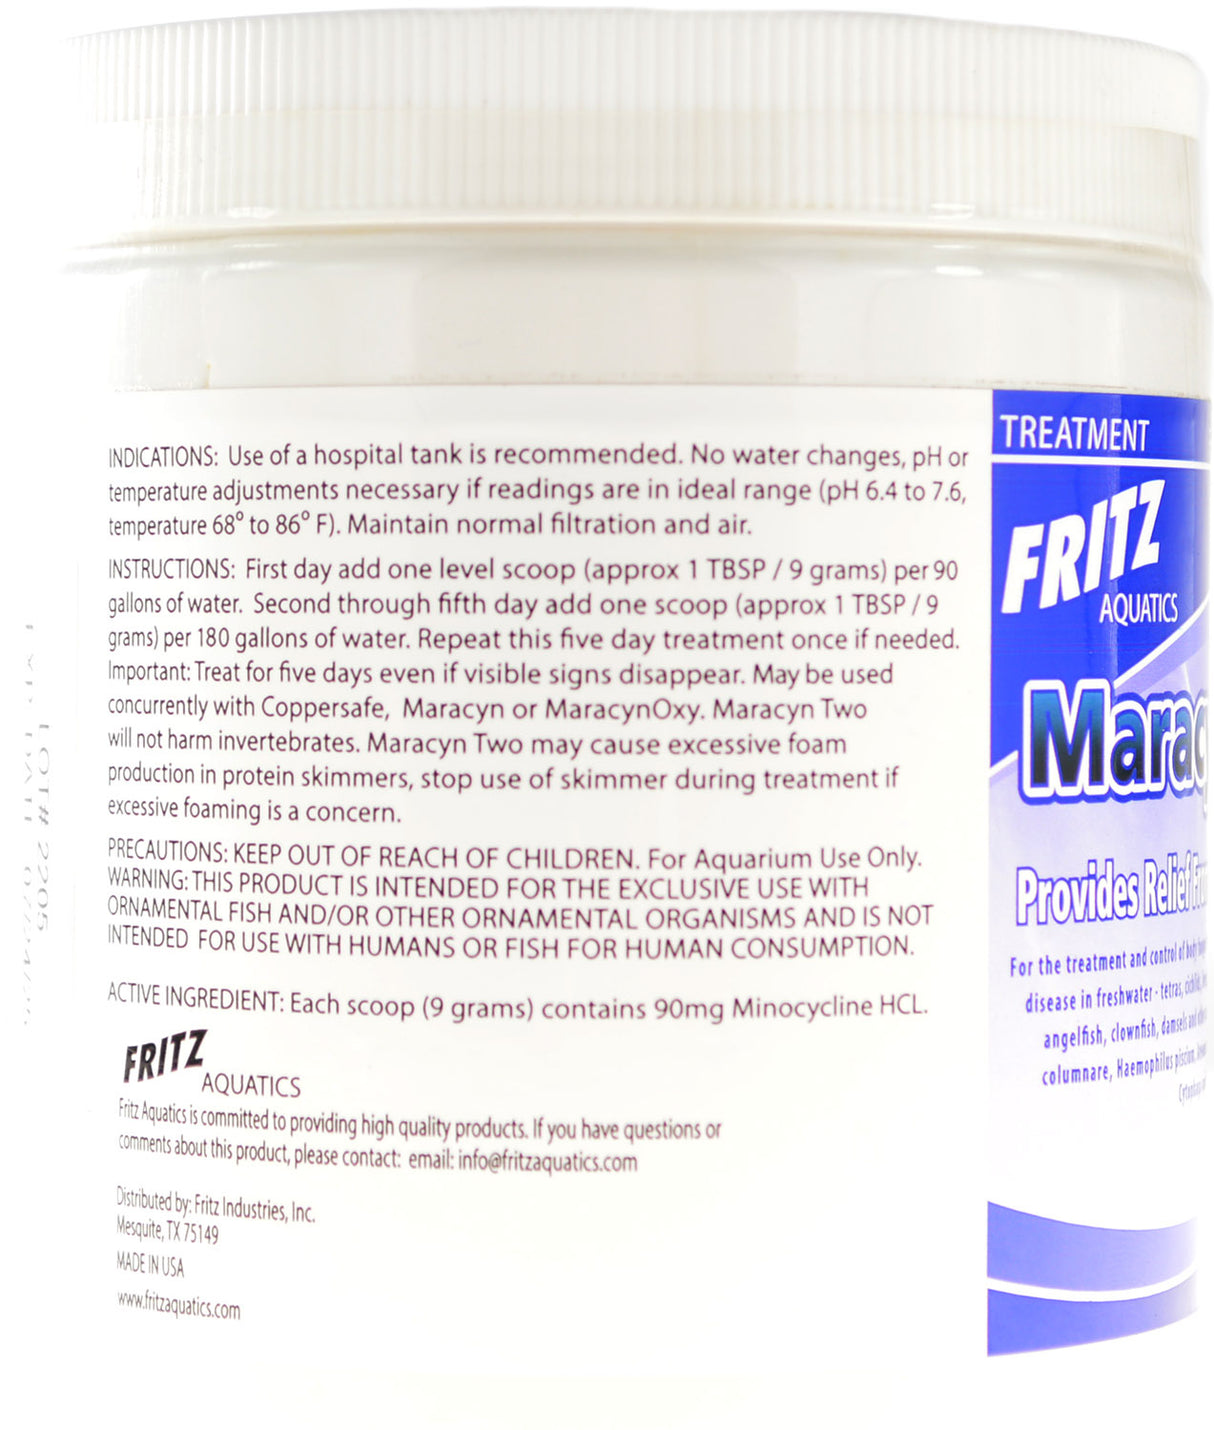 Fritz Aquatics Maracyn Two Bacterial Treatment Powder for Freshwater and Saltwater Aquariums Jar - PetMountain.com